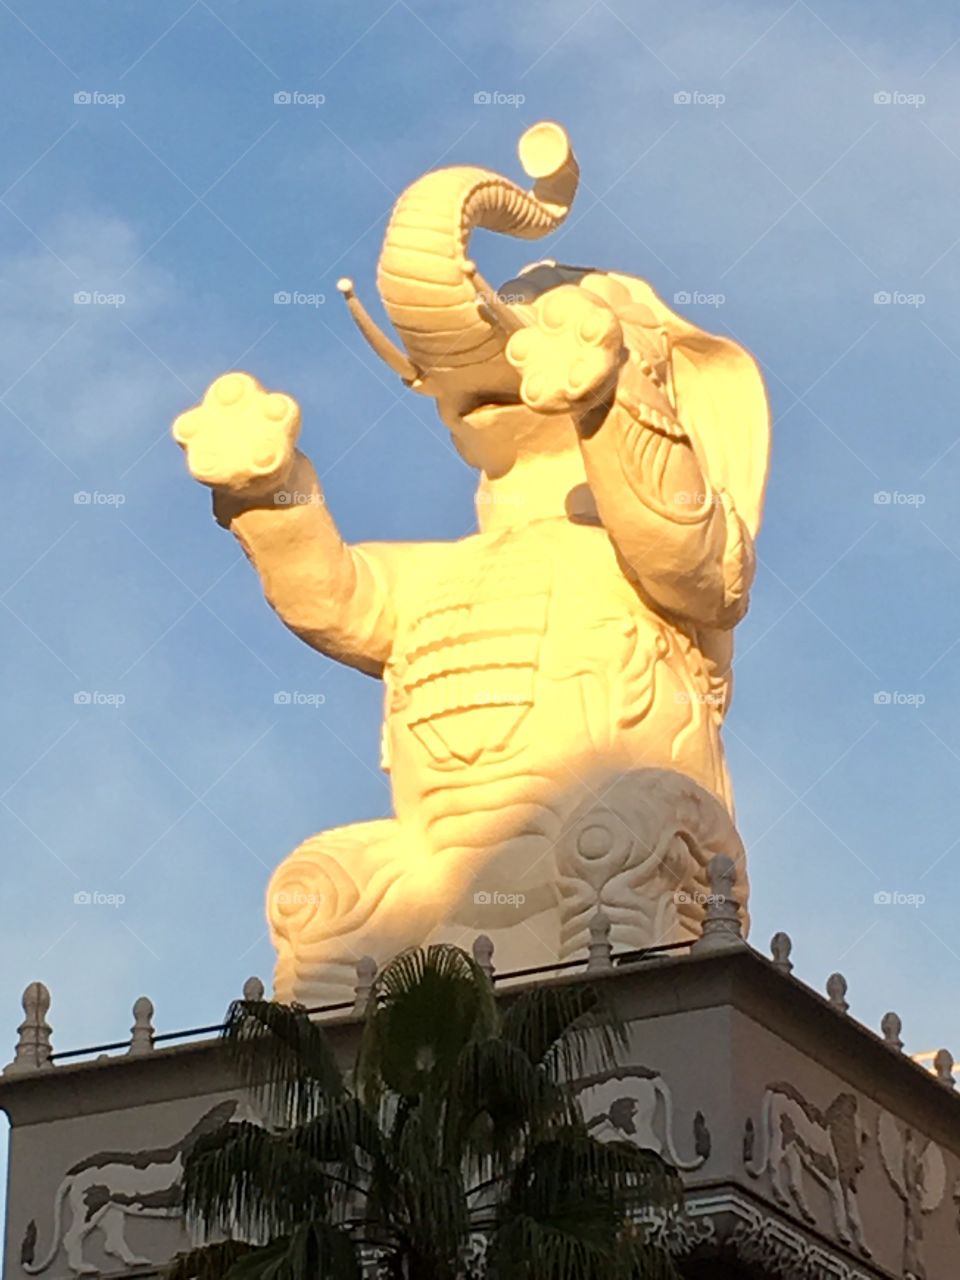 Hollywood elephant